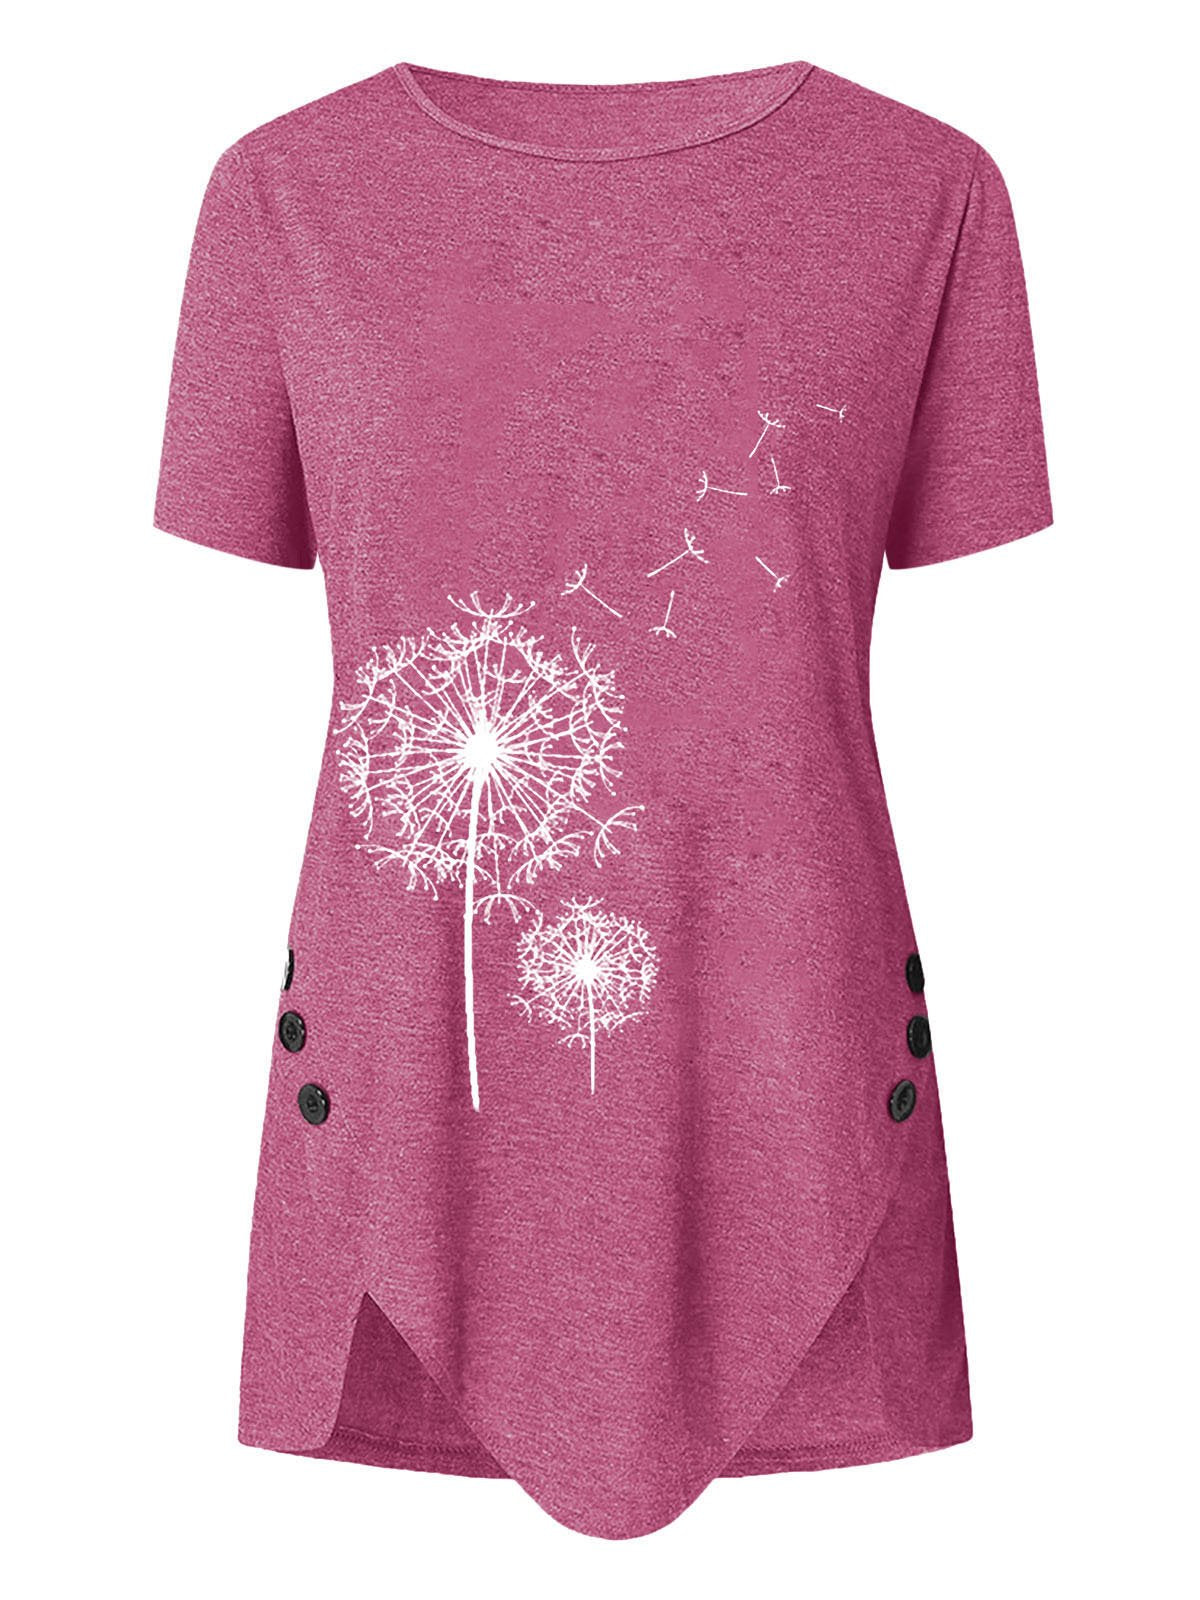 Women Short Sleeve Round Neck Floral Printed Top Irregular Hem T-shirt